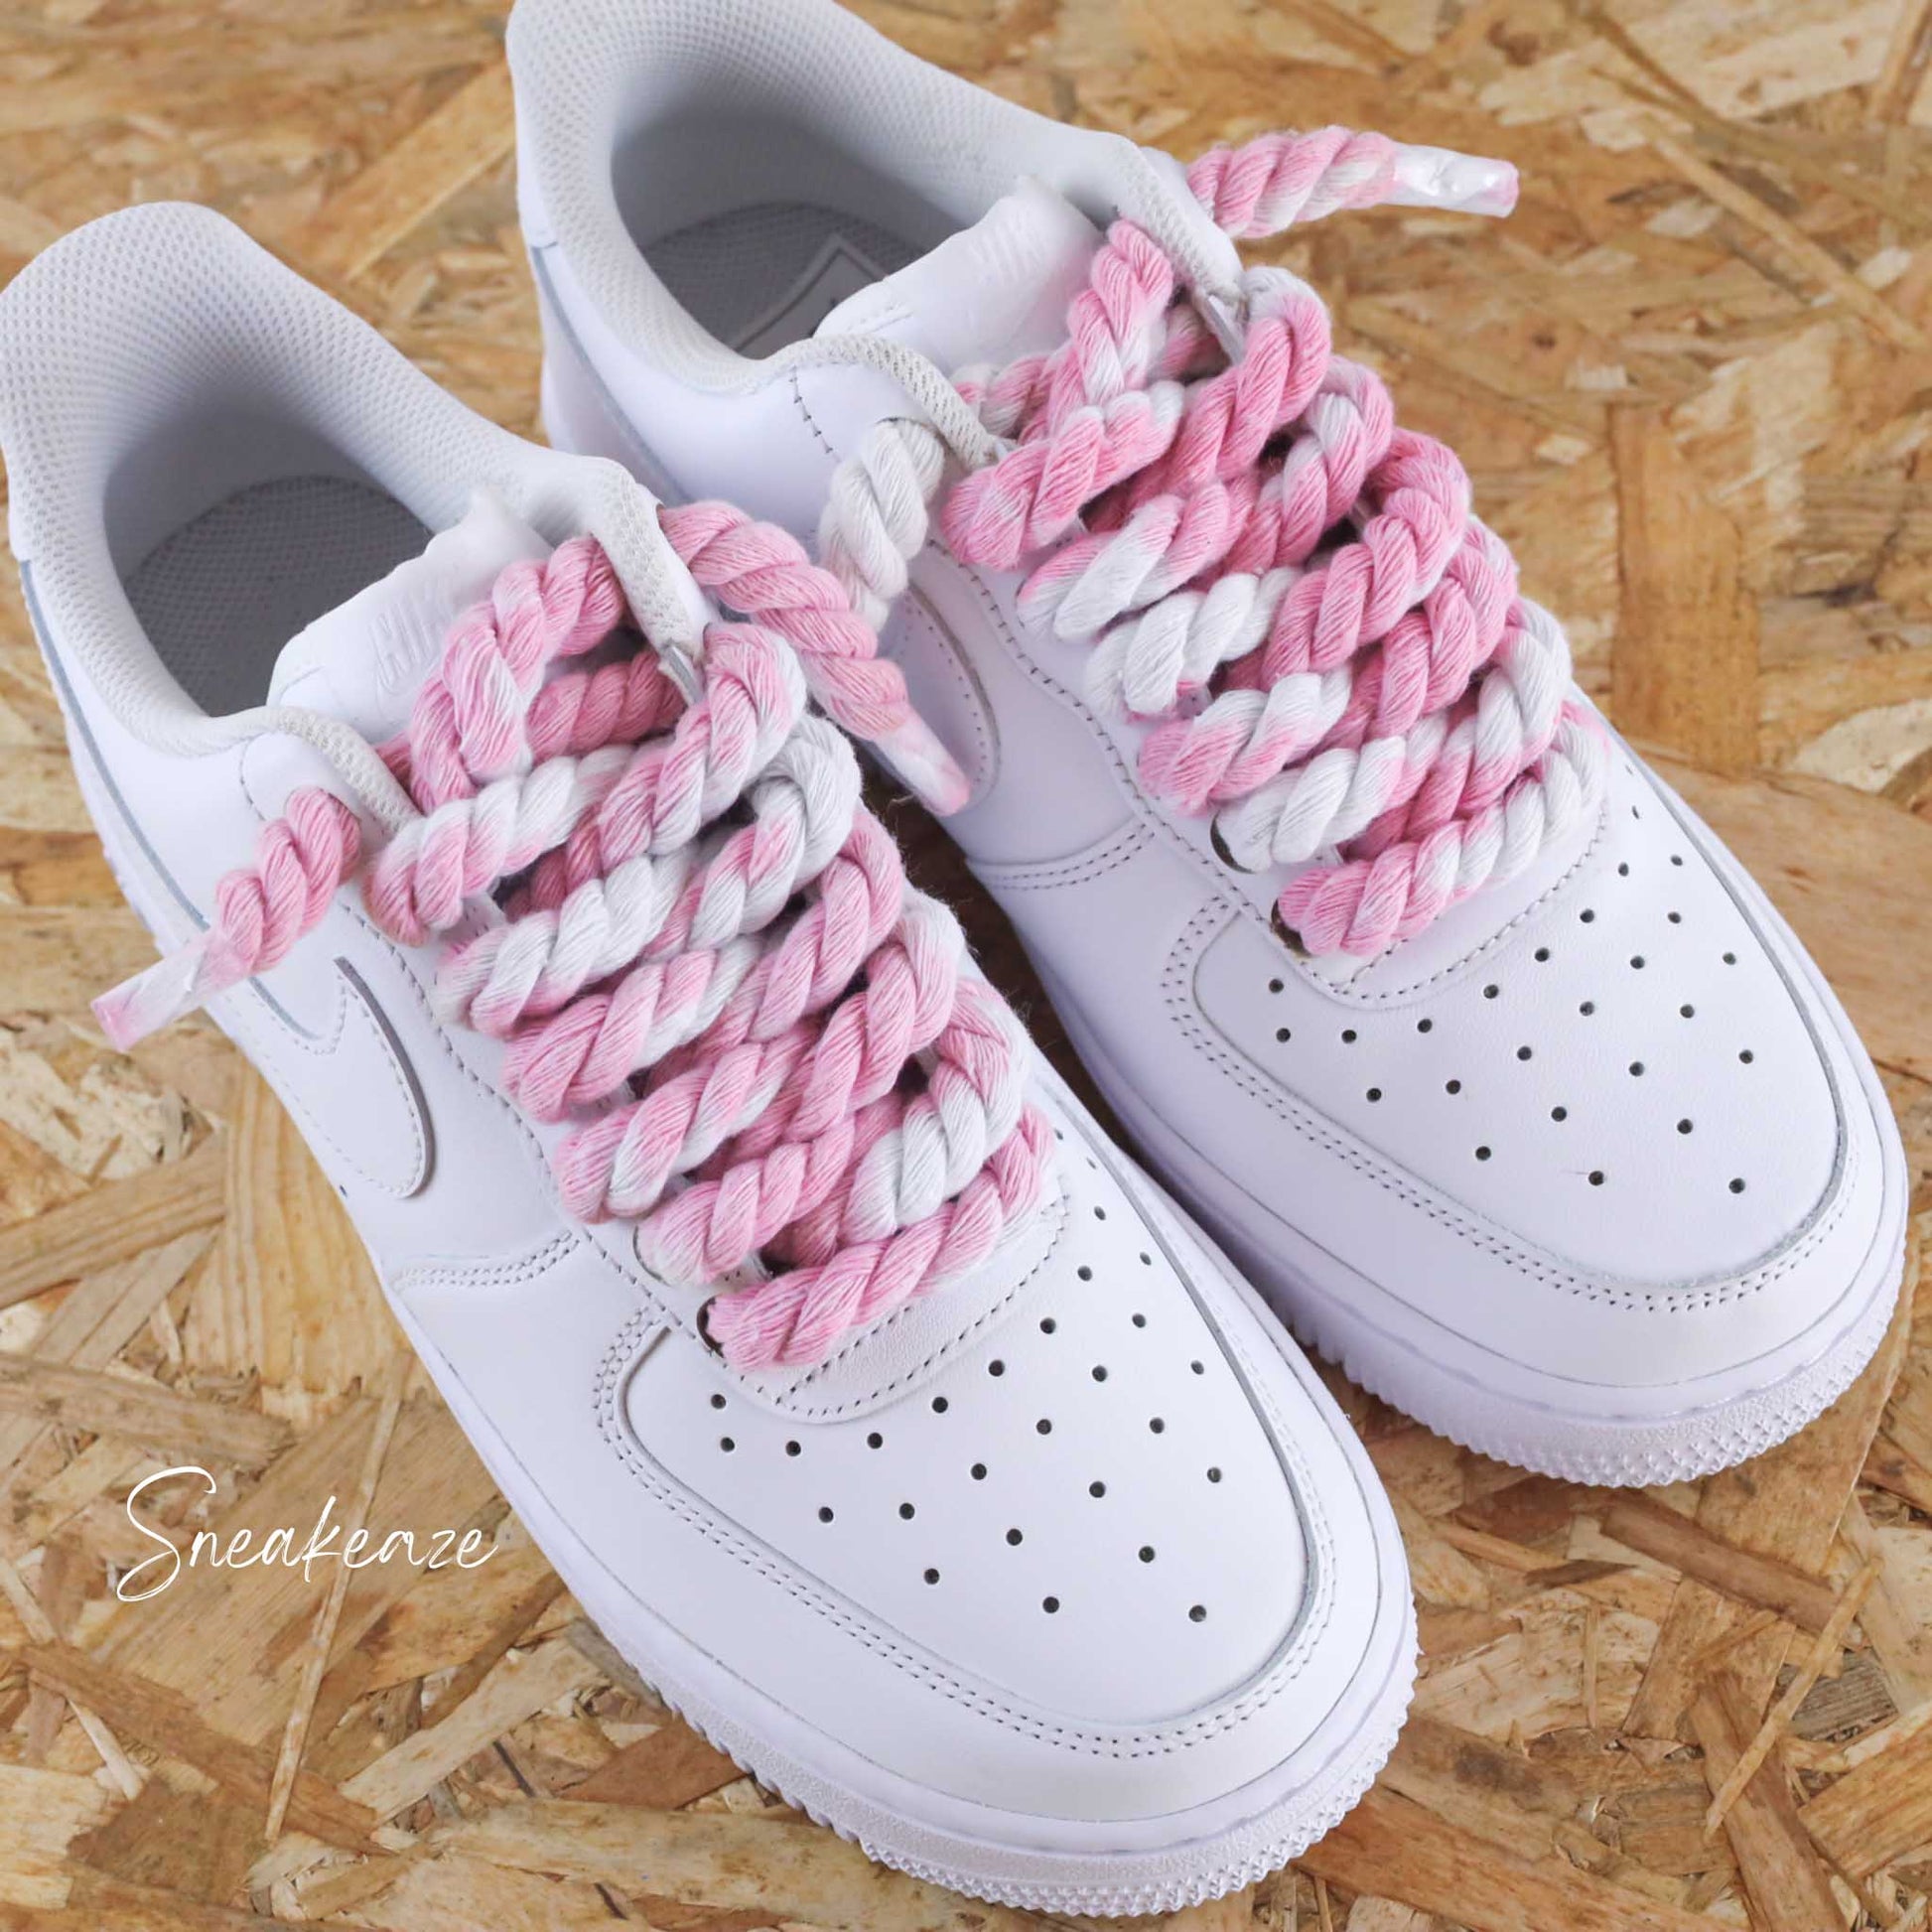 baskets nike air force 1 custom  pink rope laces sneakeaze skz customs